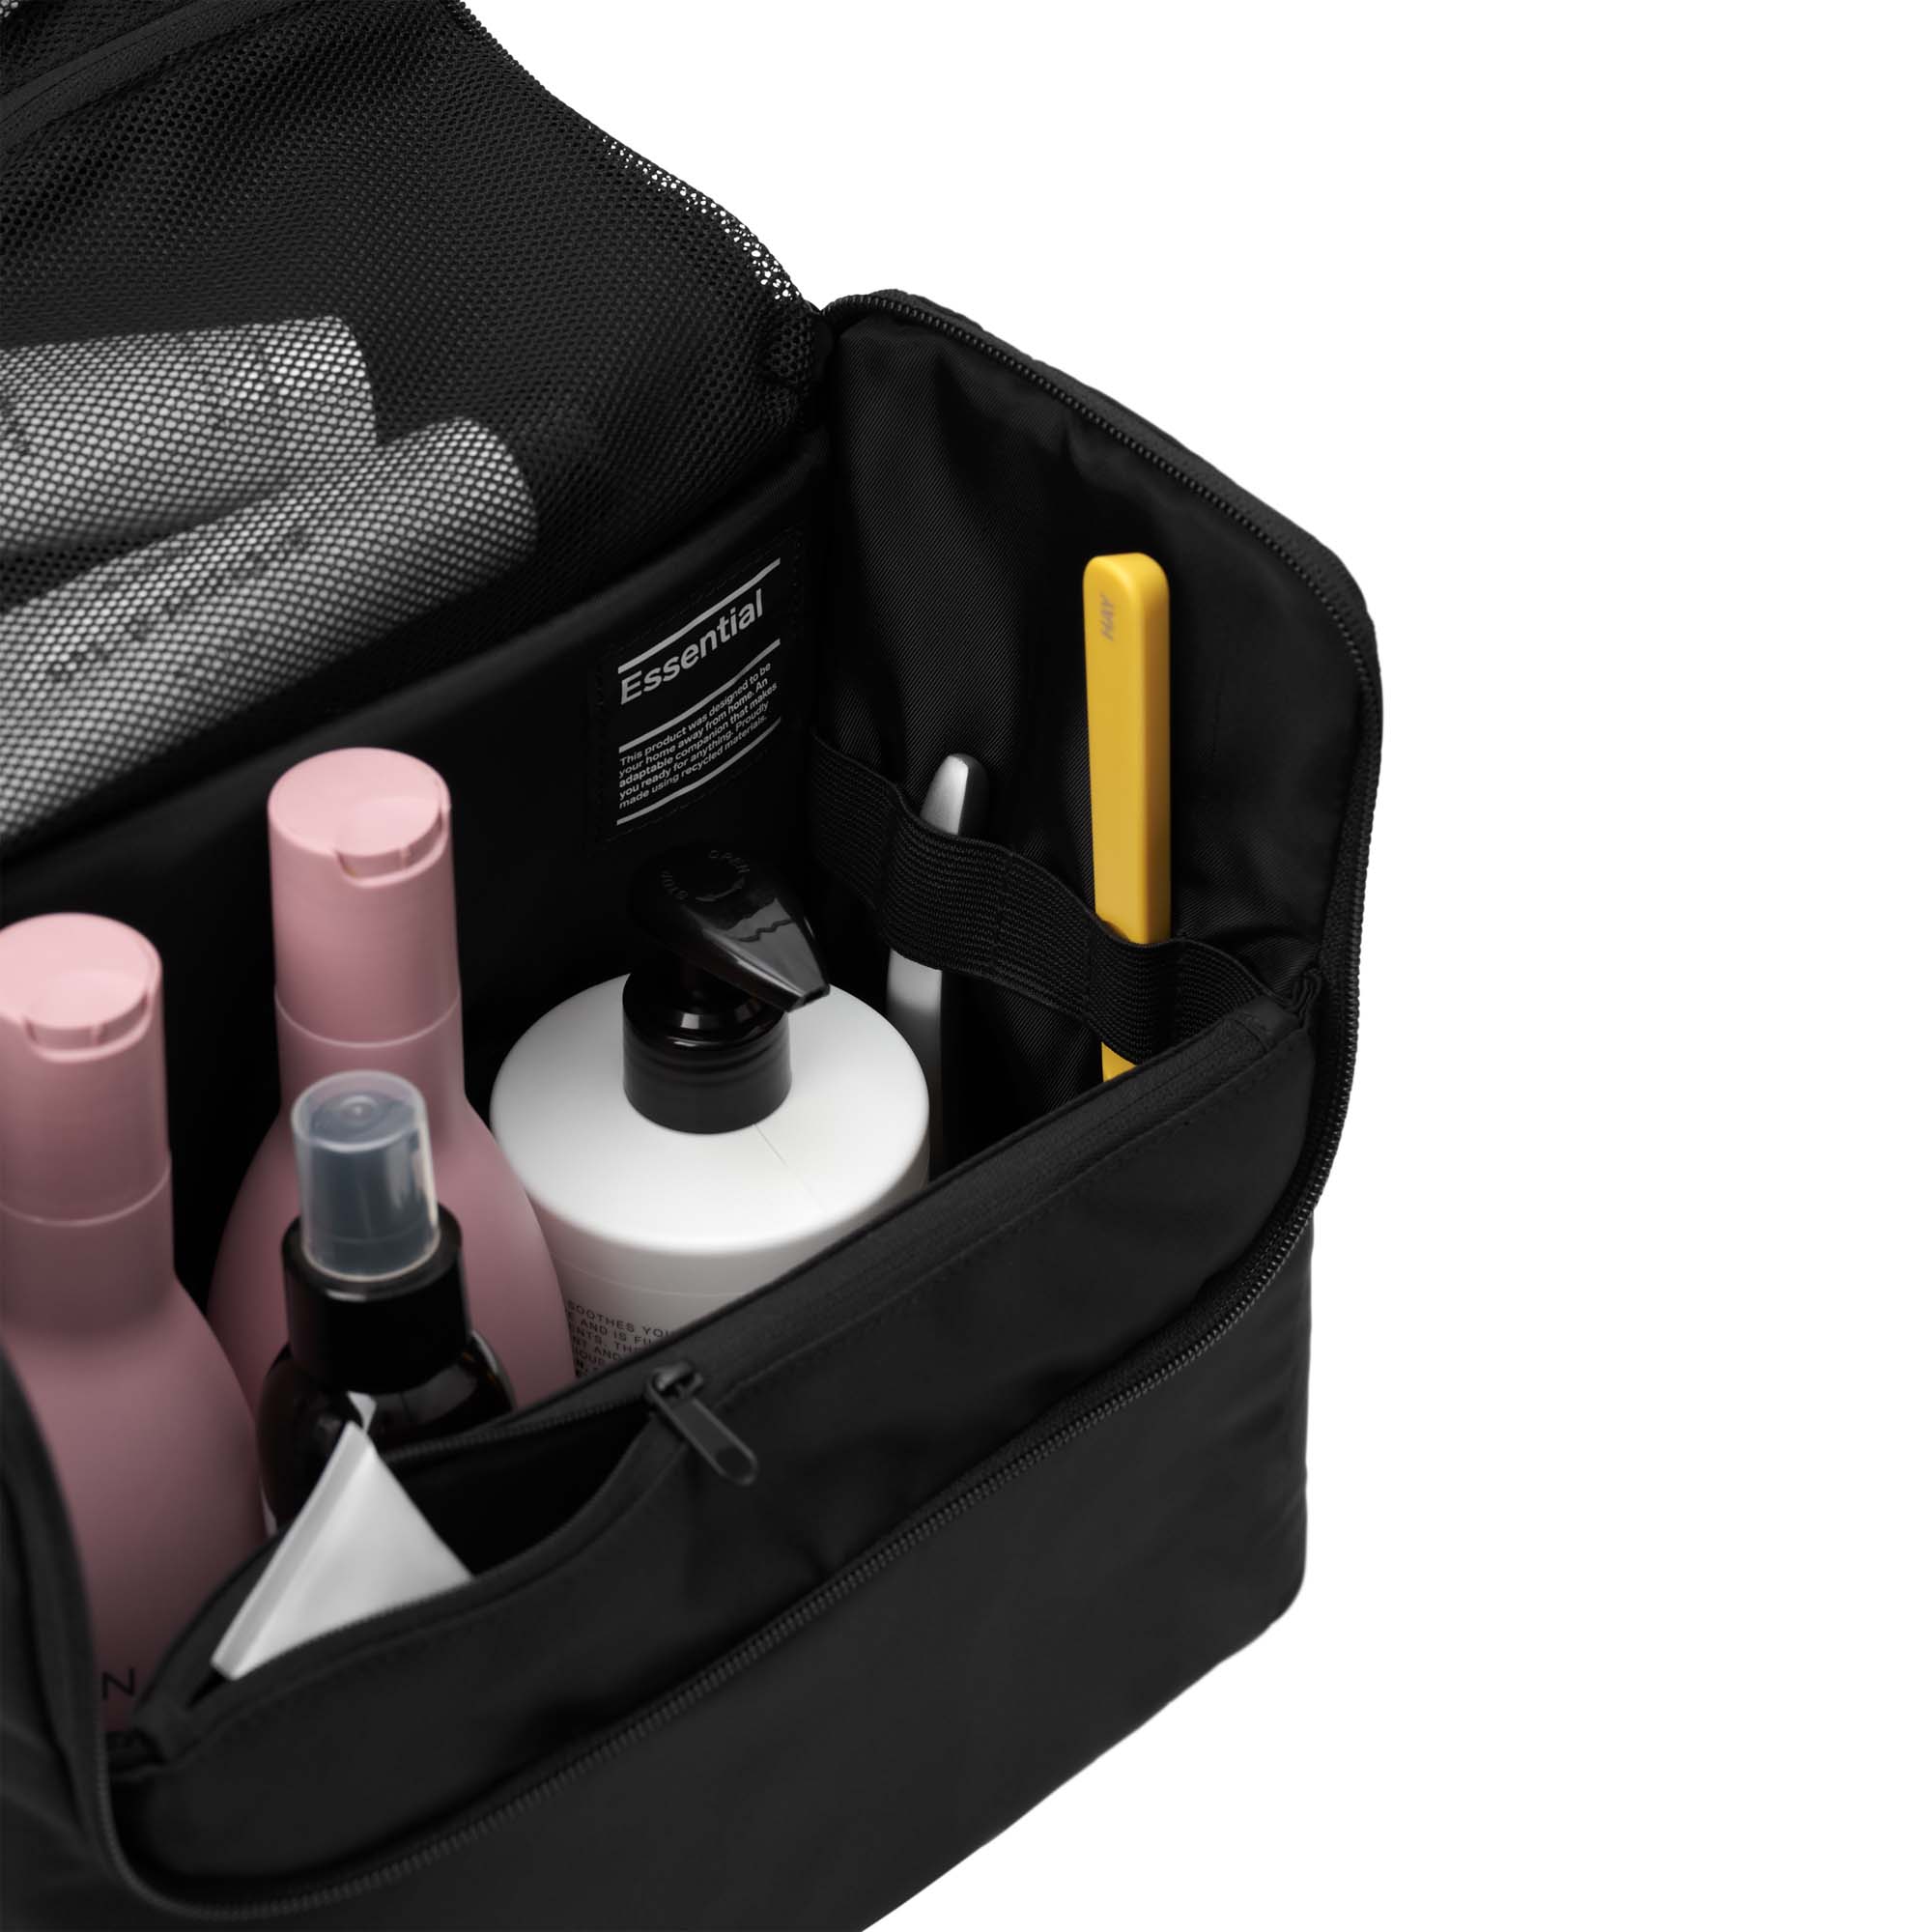 Db Essential Wash Bag M Toiletry Travel Case